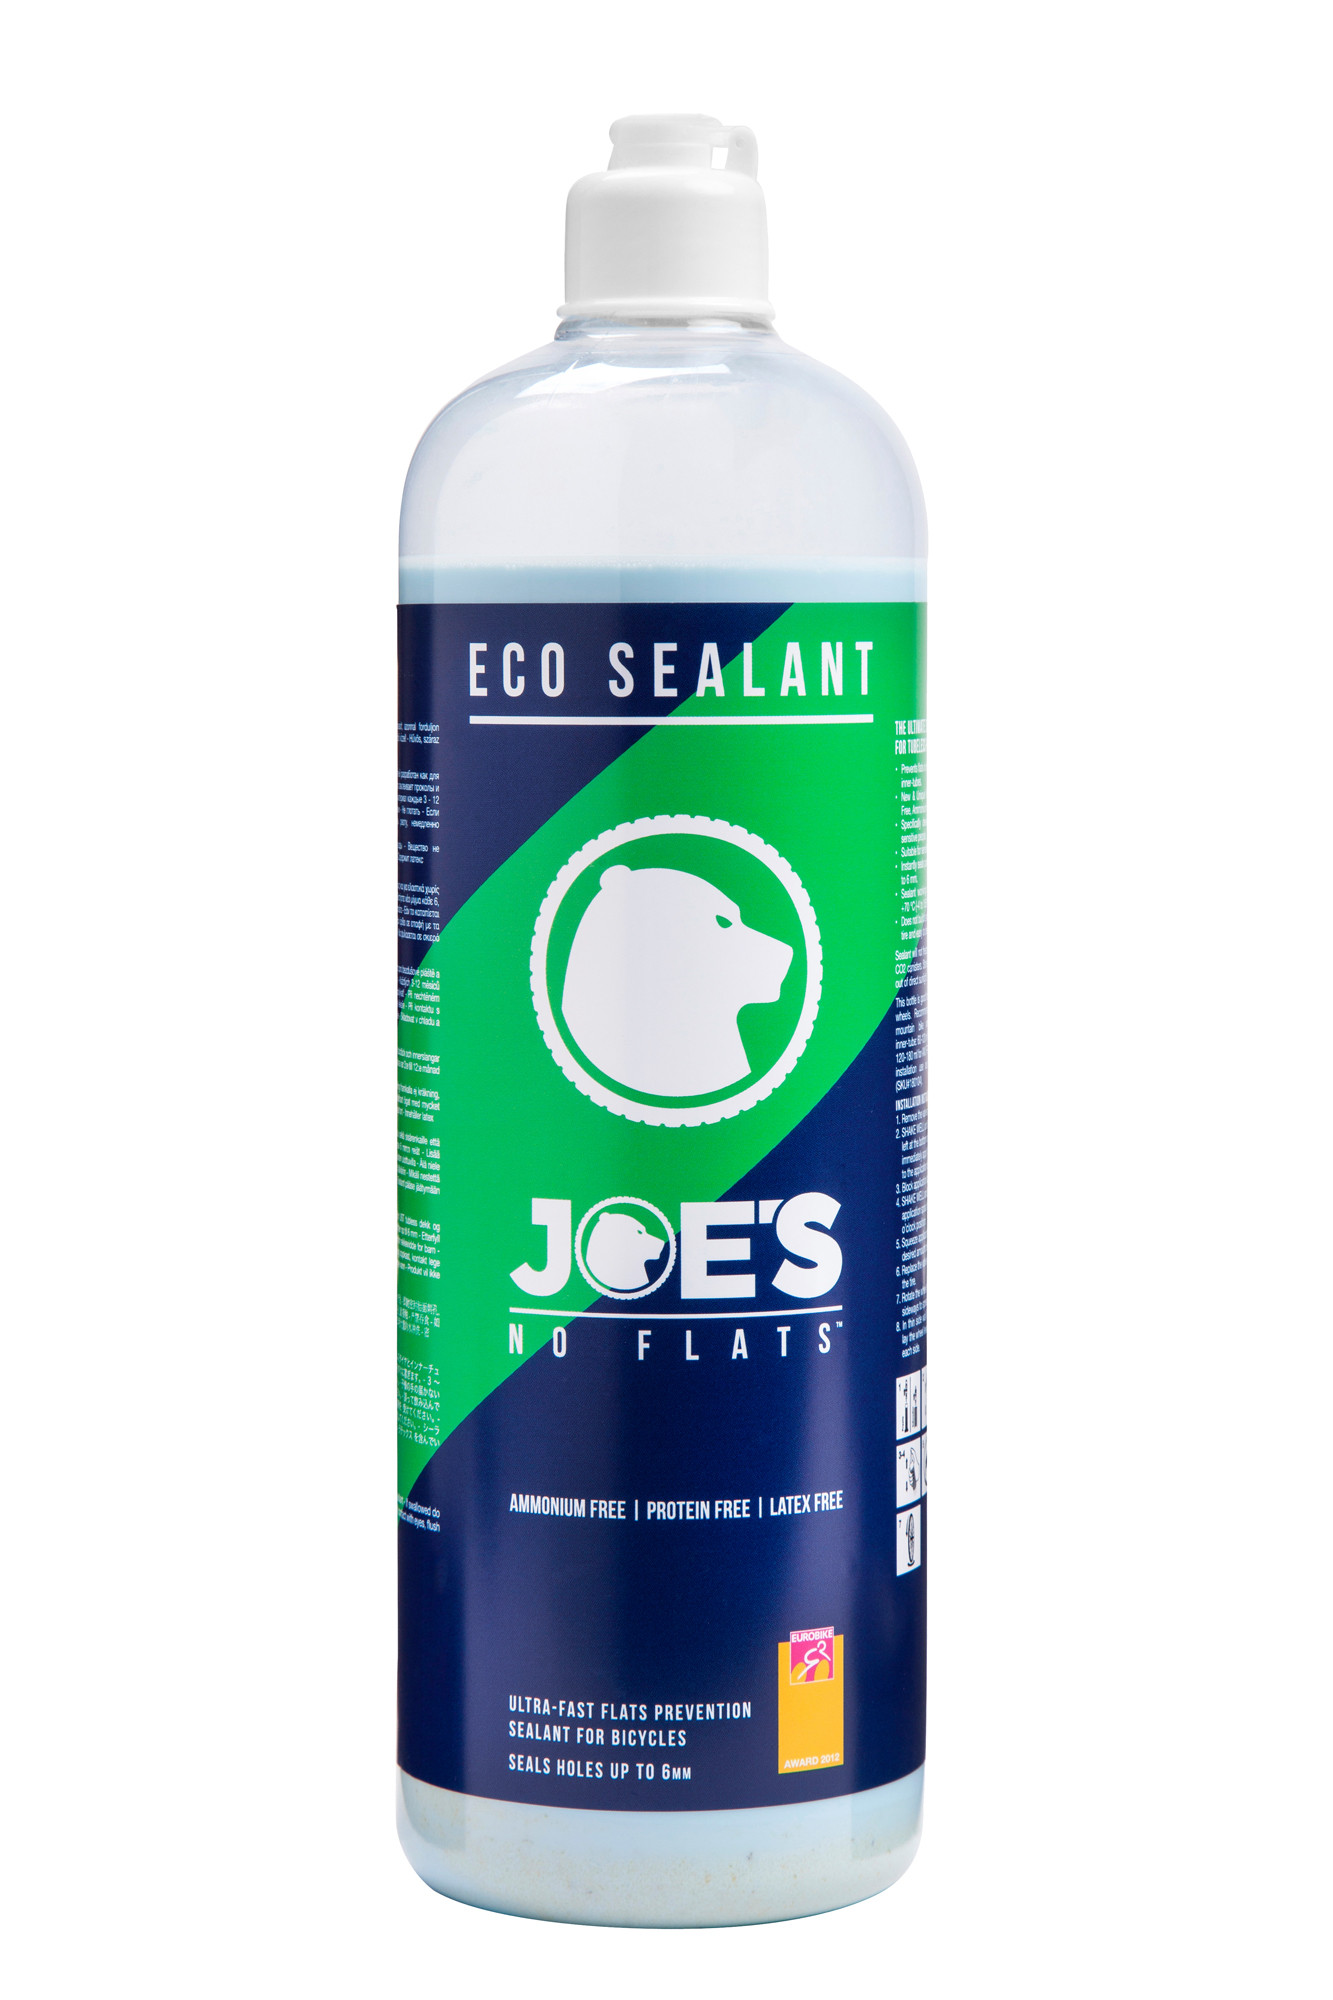 Joe's No Flats Eco Sealant 1000ml